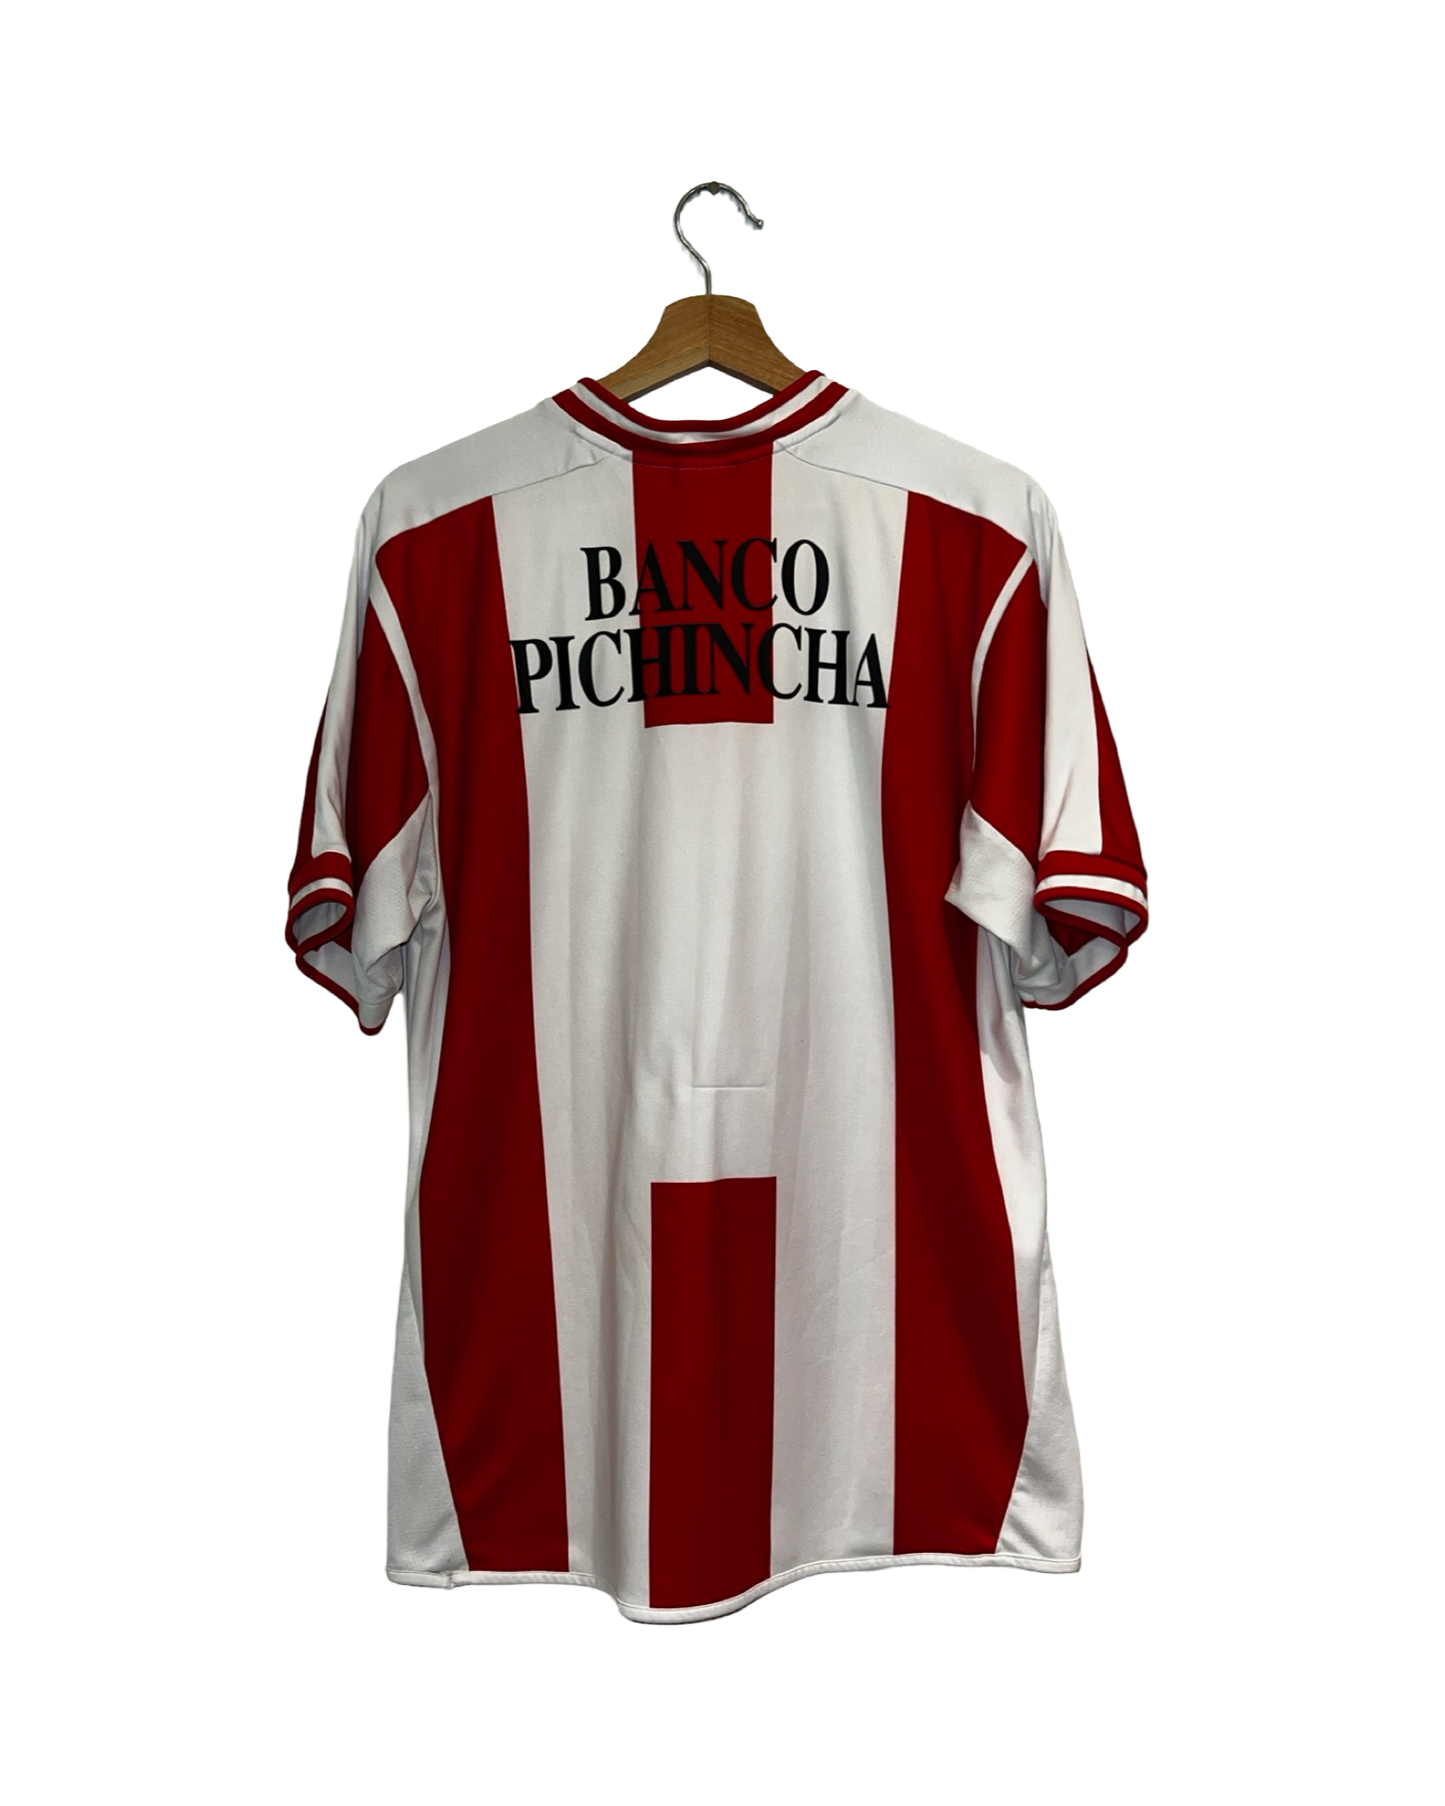 Vintage Uhlsport Banco Pichincha Soccer Jersey